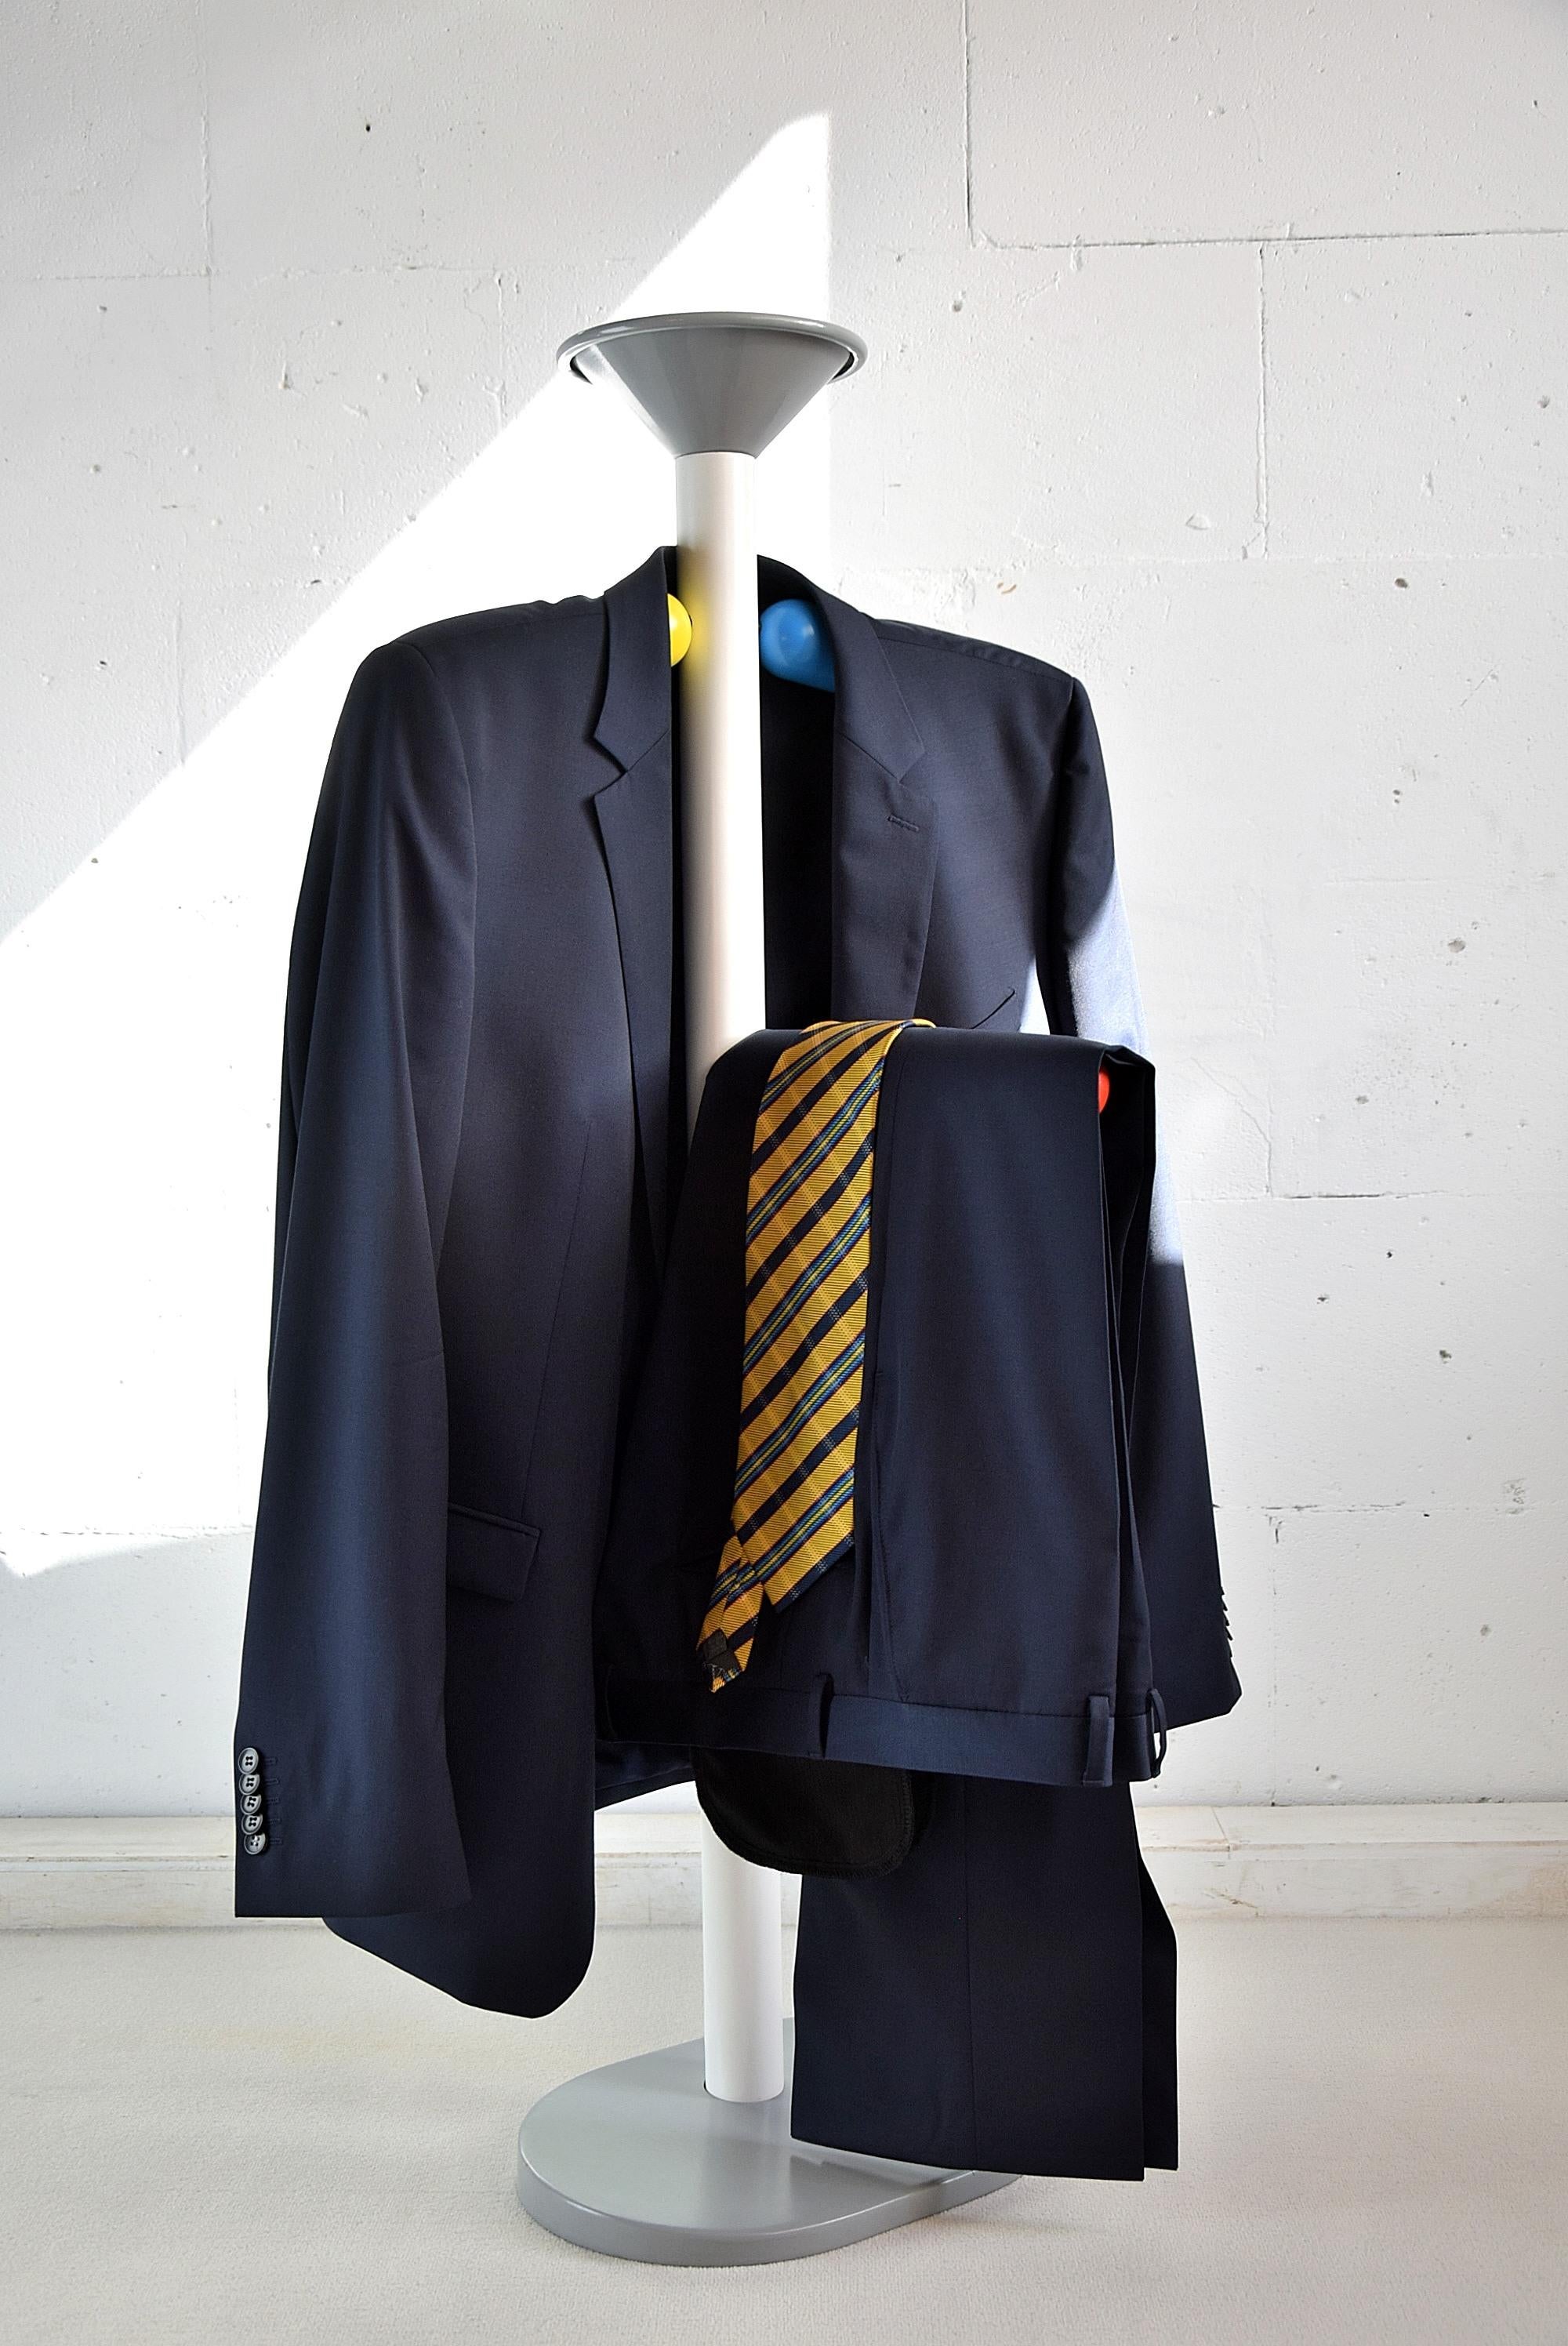 Postmodern Dressboy by De Pas, D'Urbino and Lomazzi 1